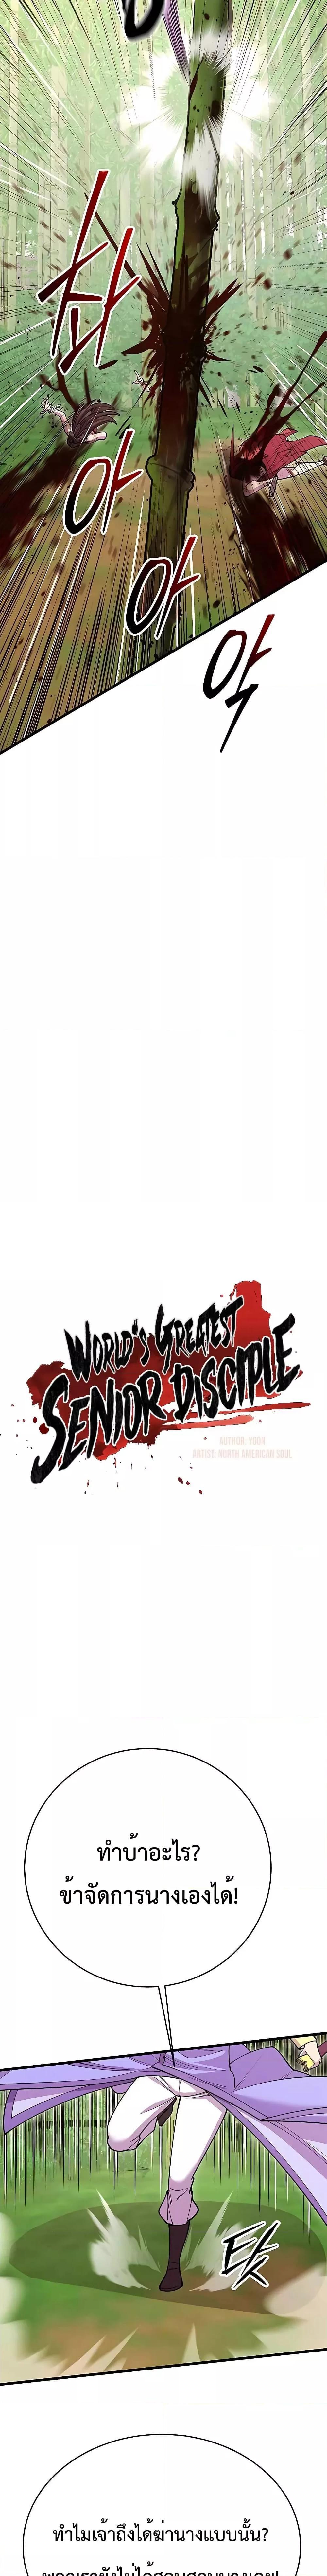 World’s Greatest Senior Disciple 44 08